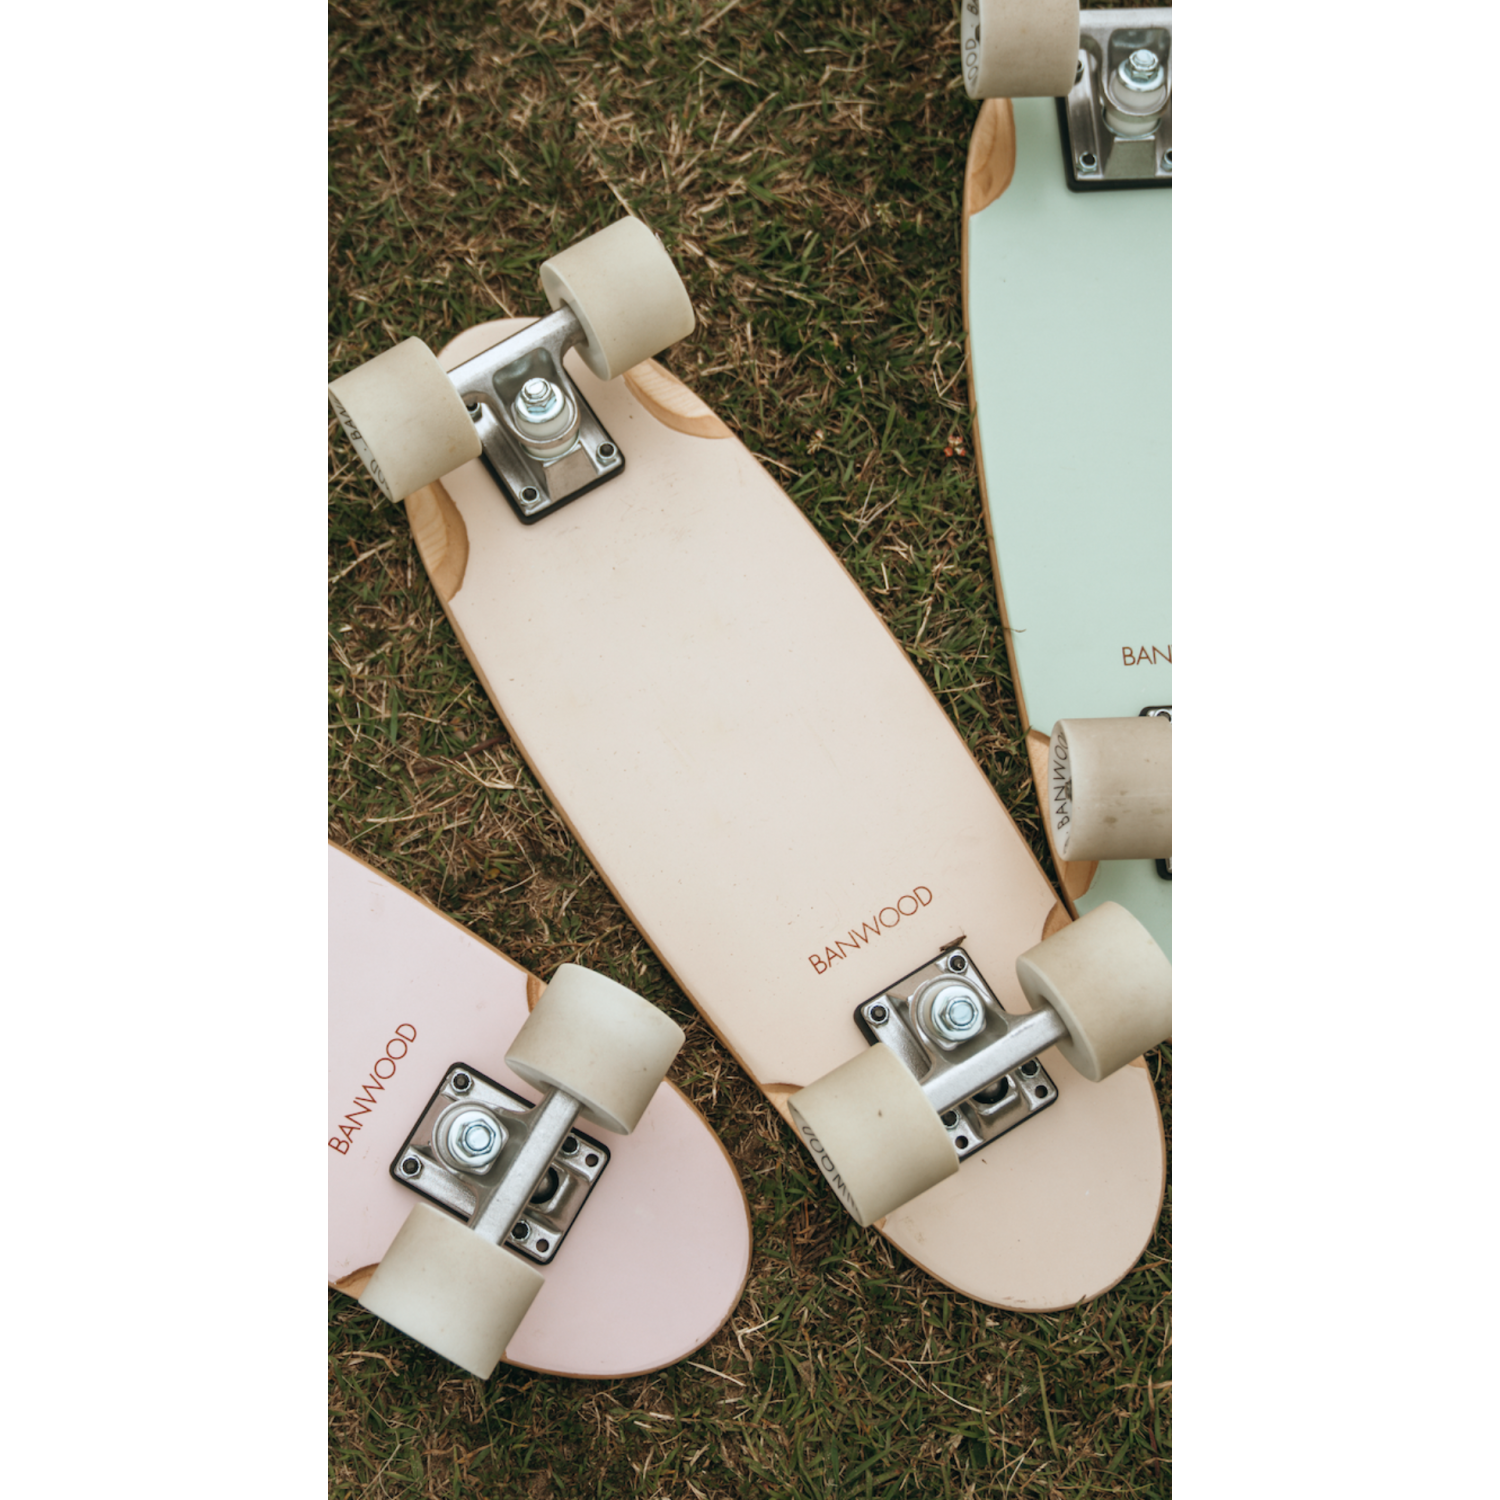 Banwood Skateboard in Cream | For 3+ years | Children of the Wild